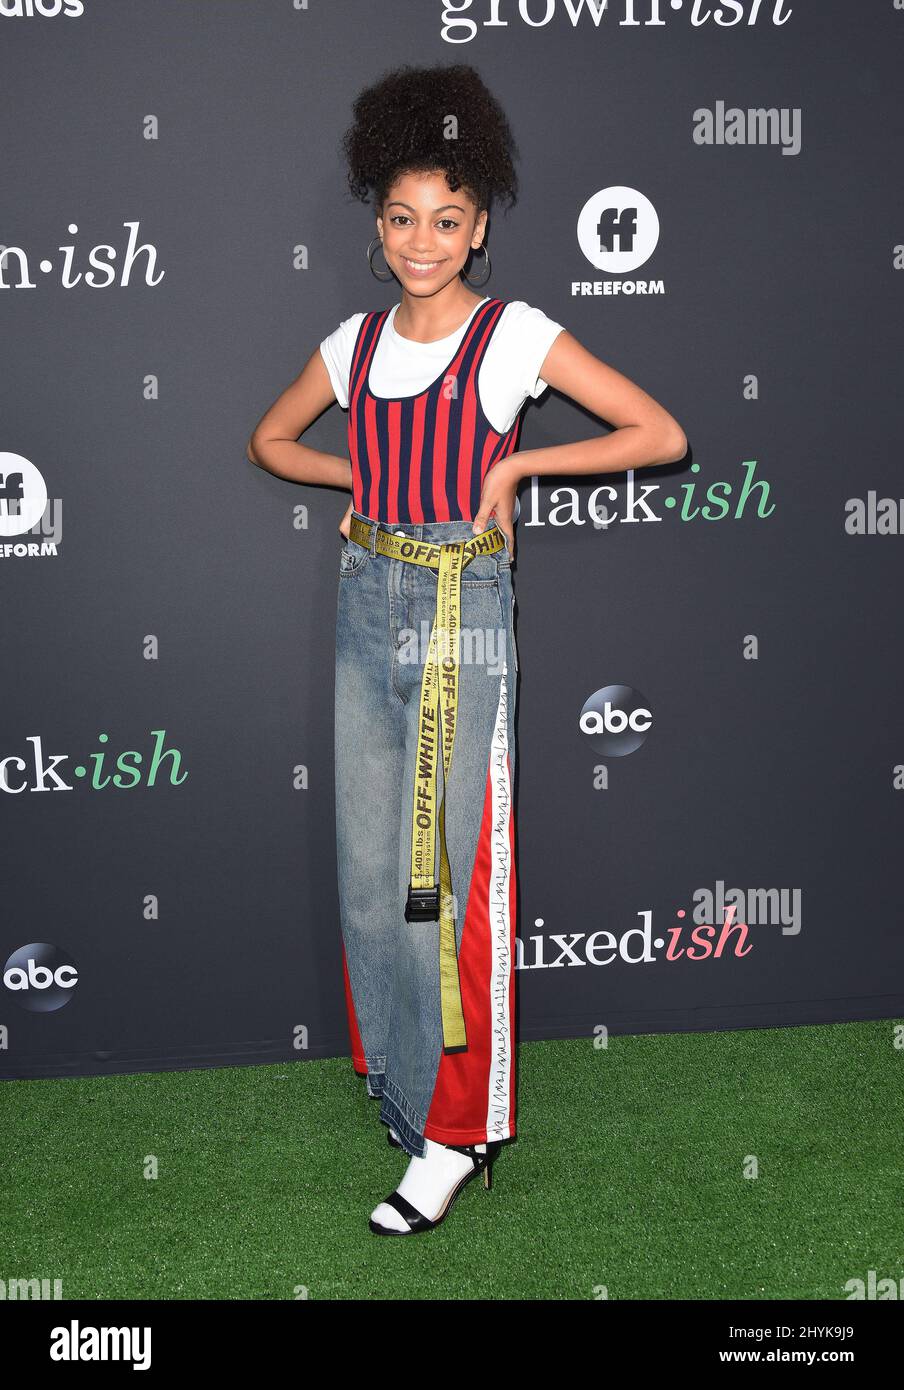 Arica Himmel arriva all'evento ABC "Encle Your Ish" presso Goya Studios il 17 settembre 2019 a Hollywood, California. Foto Stock